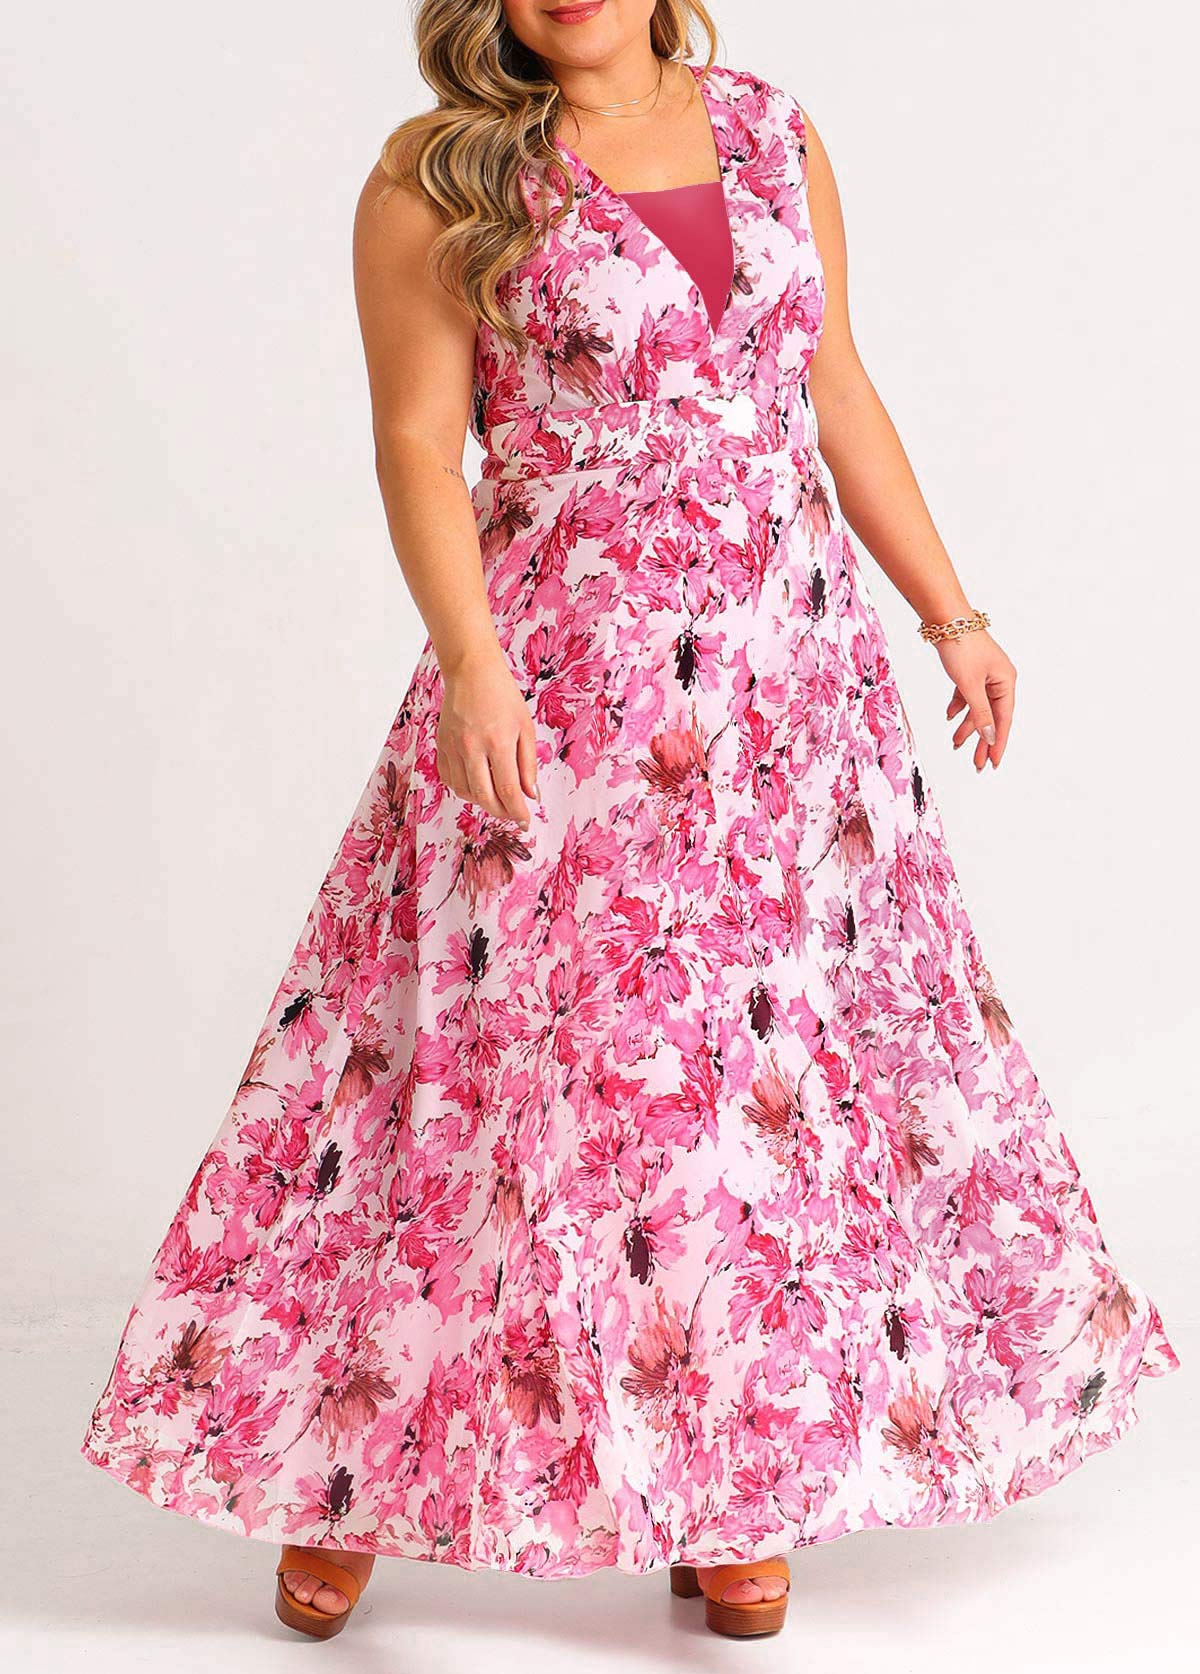 Floral Print Pink Chiffon Sleeveless Plus Size Dress